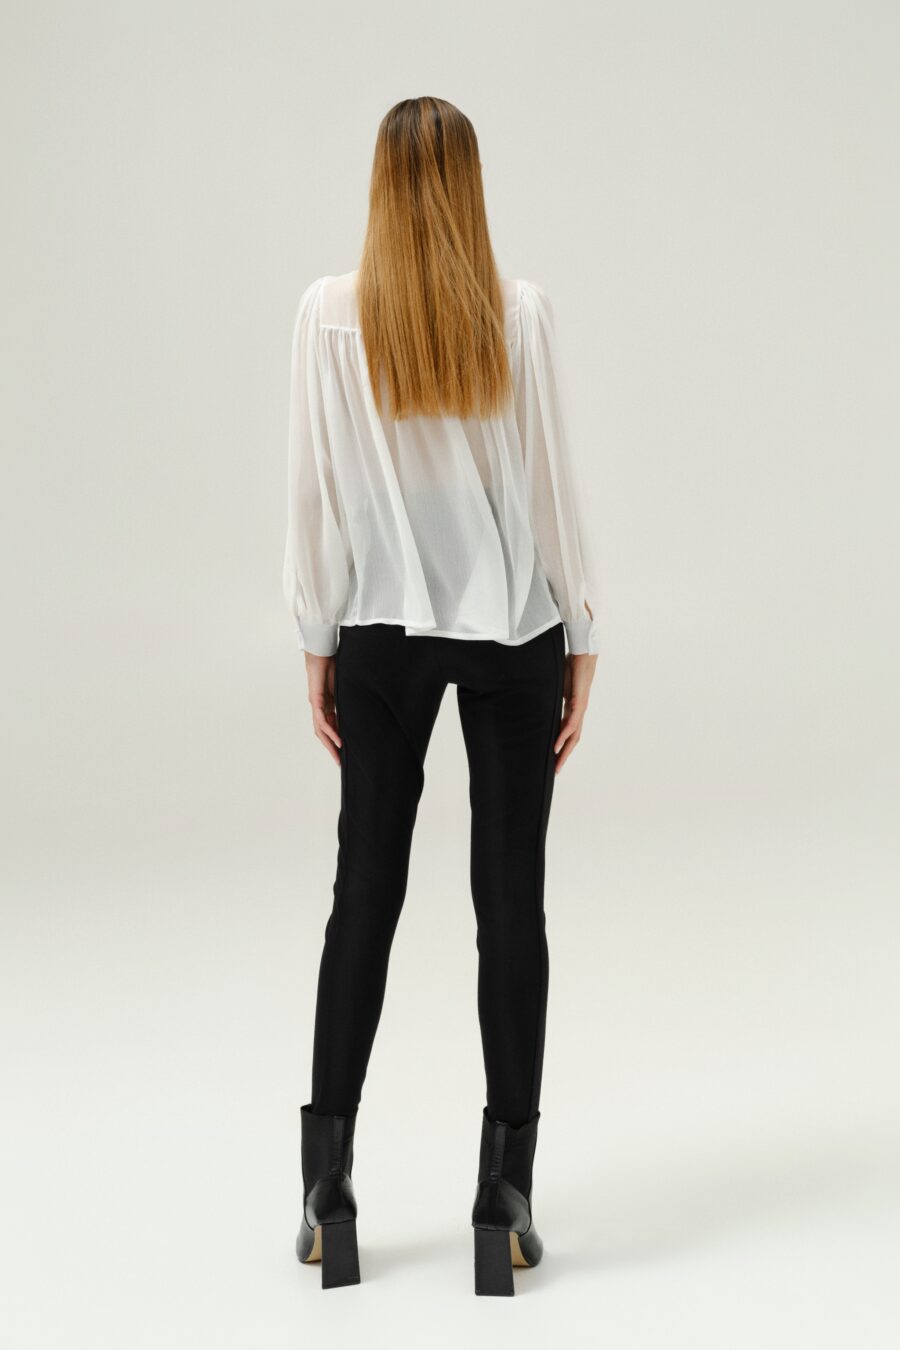 blouse-art-l7950-12